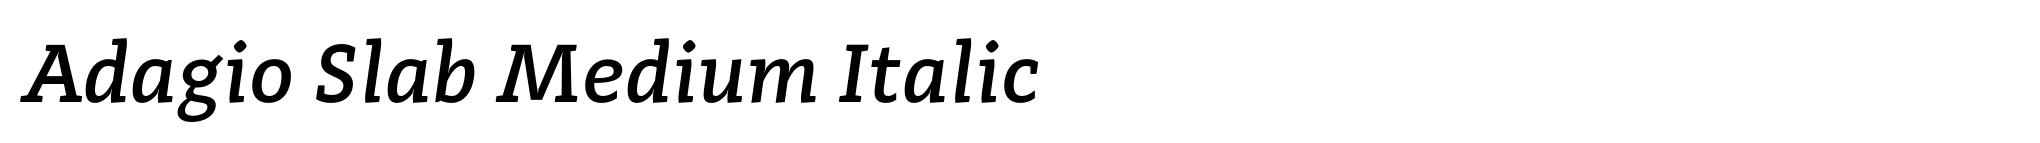 Adagio Slab Medium Italic image